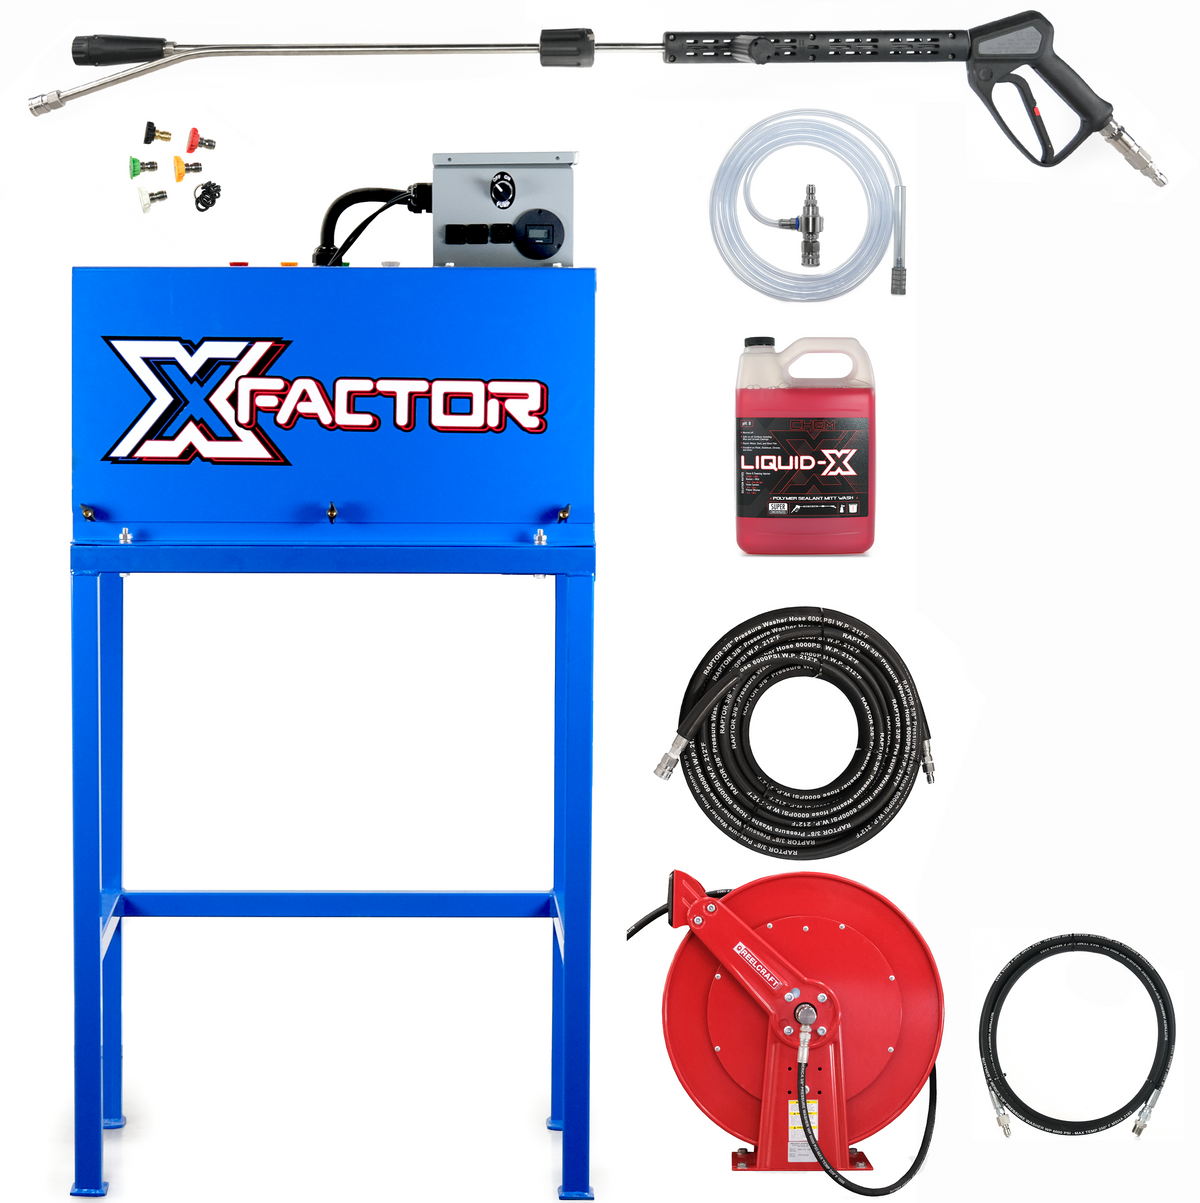 X Factor Complete Wash Bay System: Stationary 220v Electric - Big Easy Foaming Kit - Chem-X